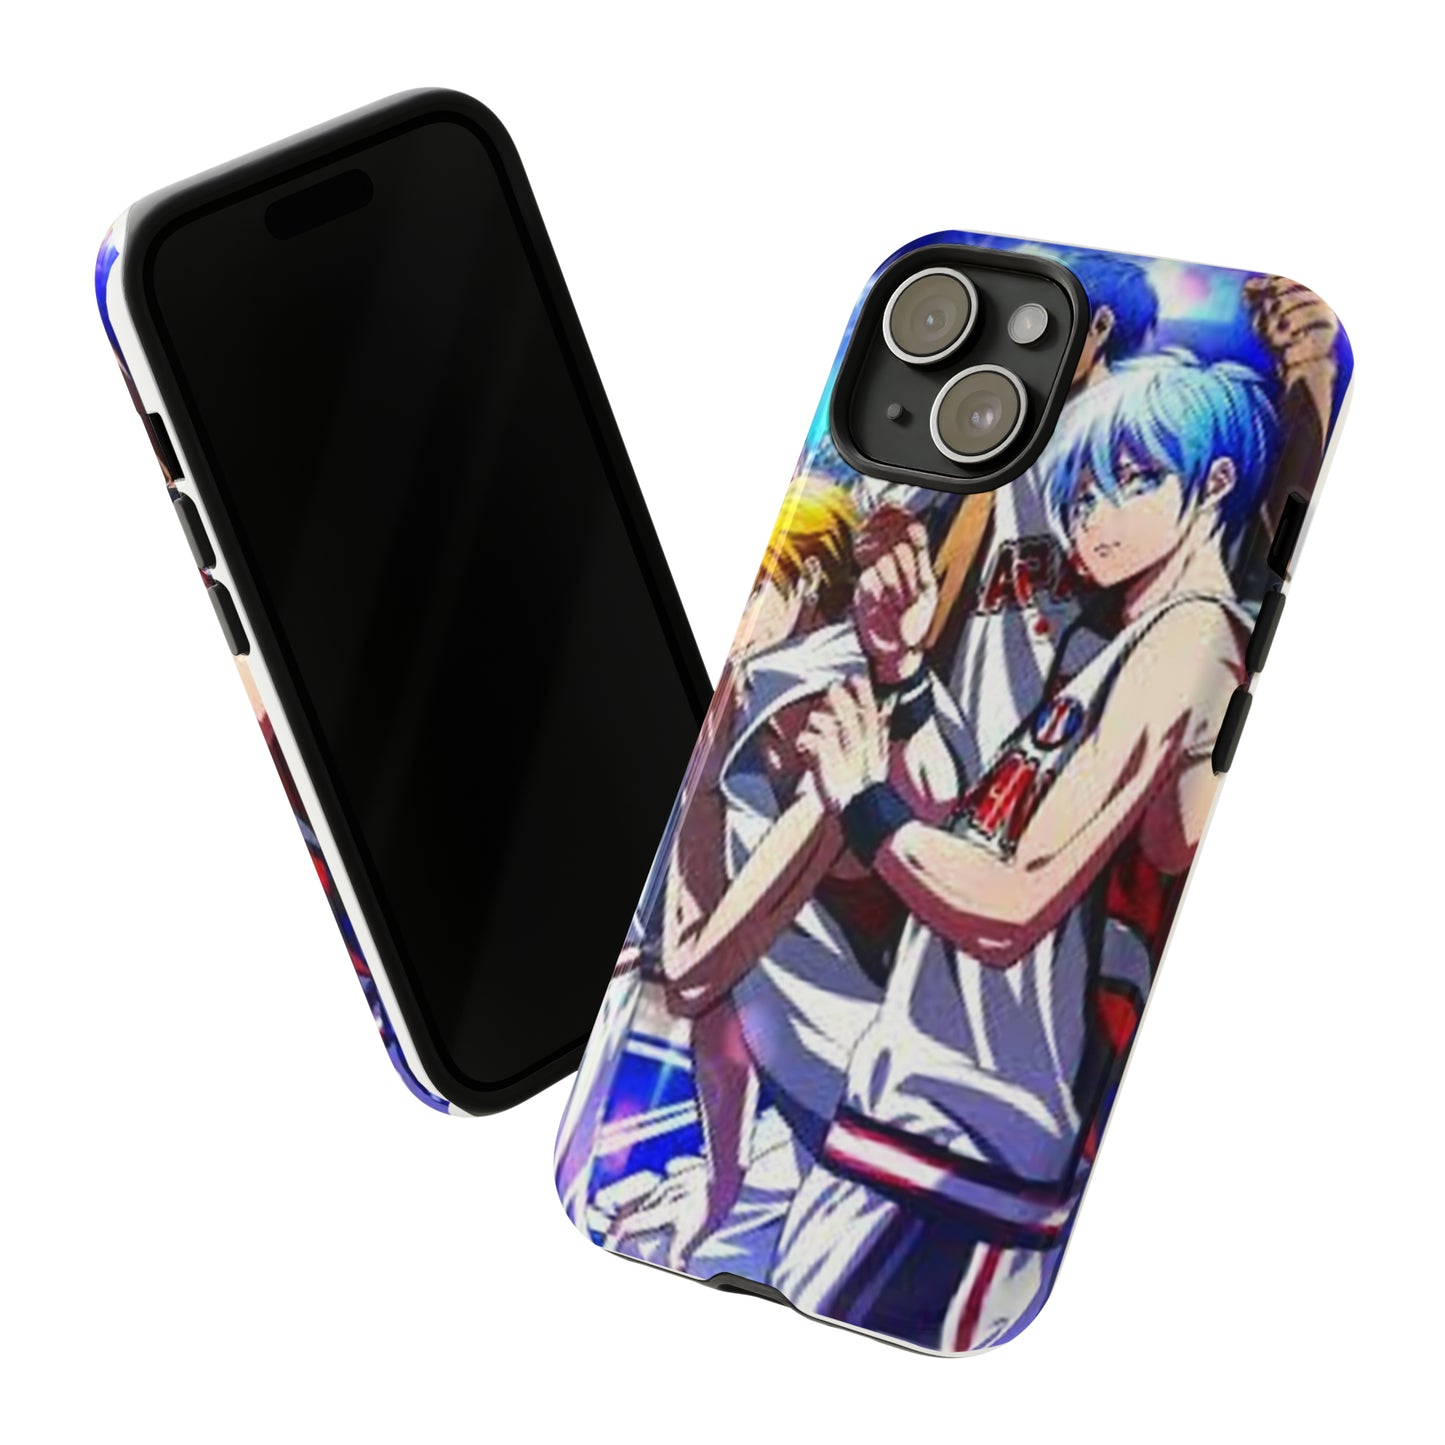 Kuroko Basketball phone Cases